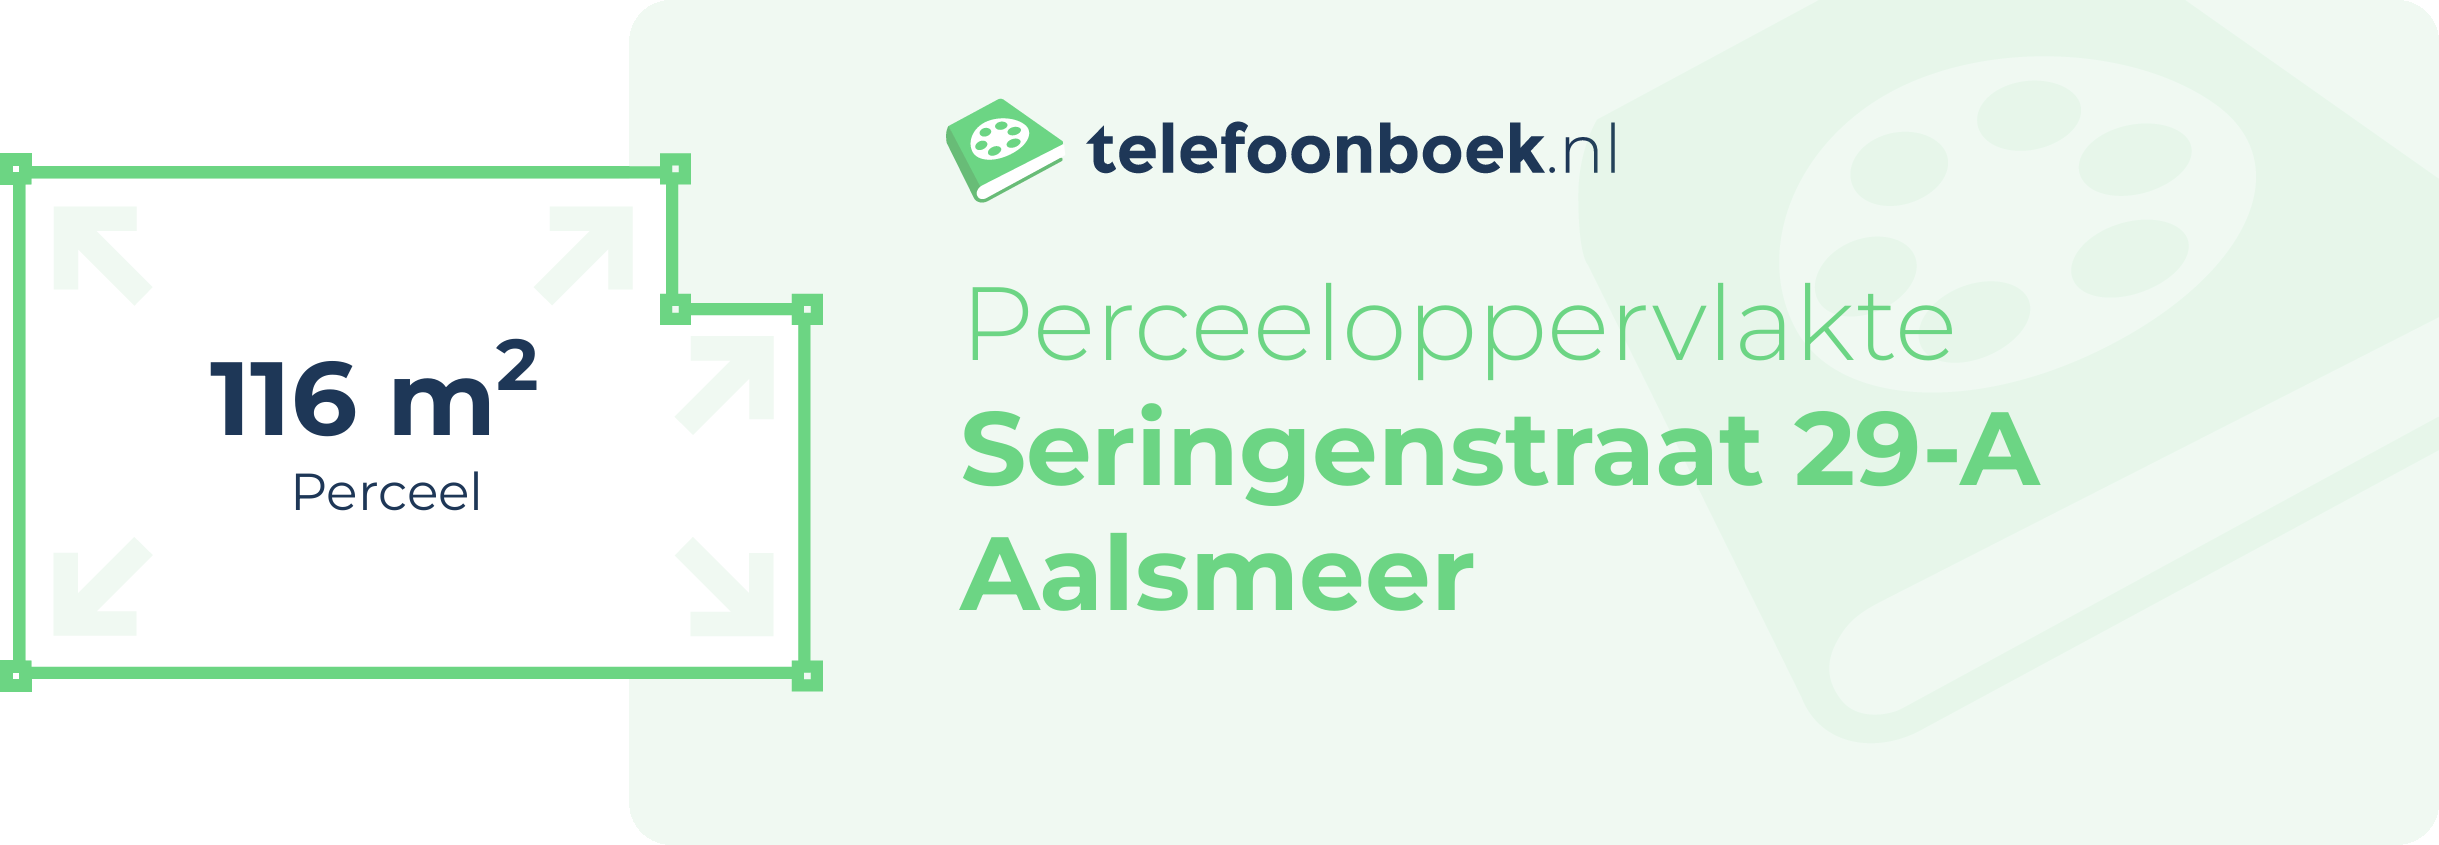 Perceeloppervlakte Seringenstraat 29-A Aalsmeer